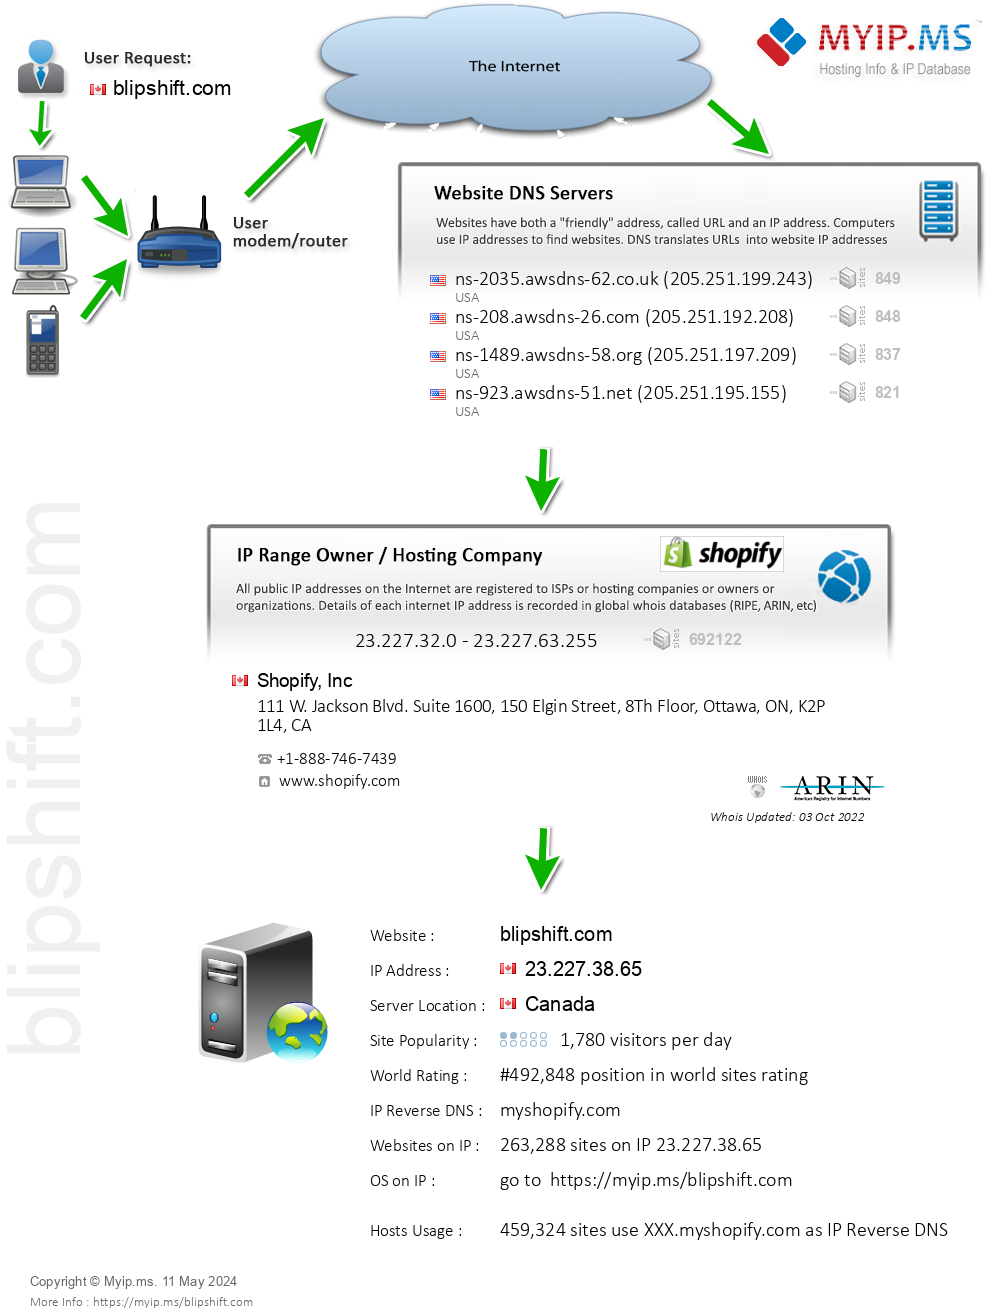 Blipshift.com - Website Hosting Visual IP Diagram